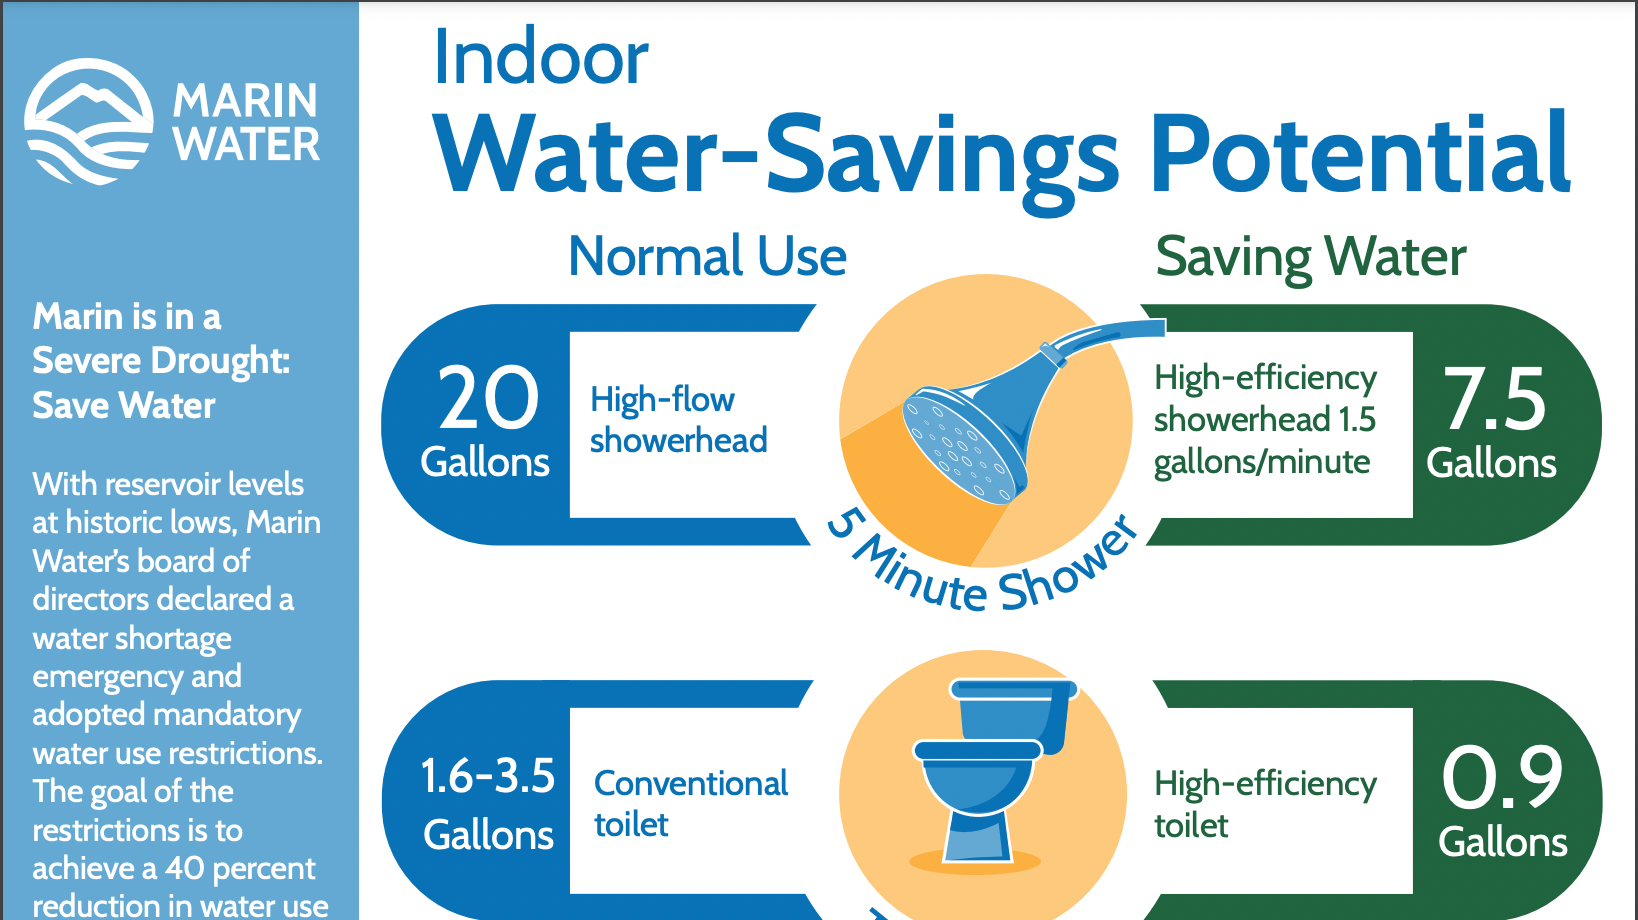 Thumbnail image of Indoor Water-Savings Potential brochure